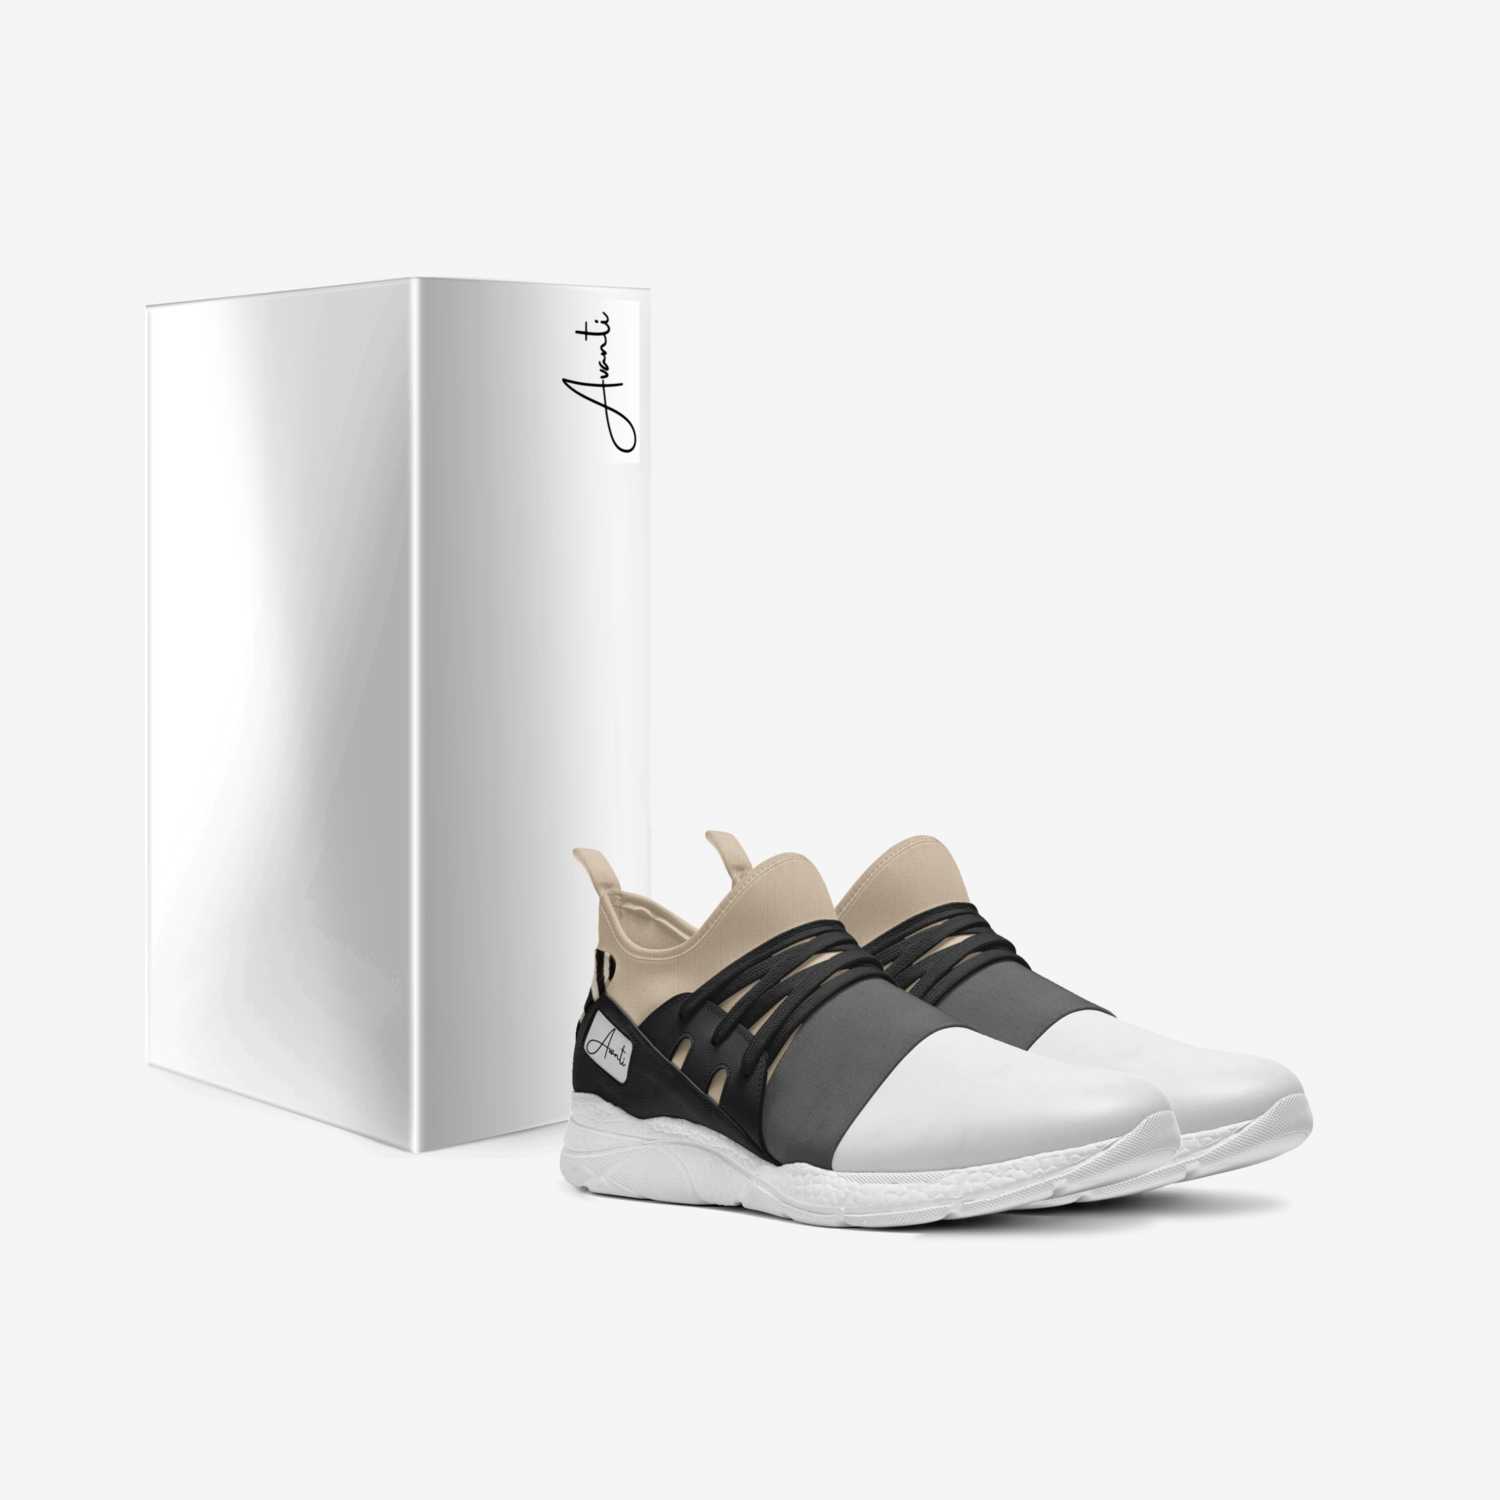 Avanti custom made in Italy shoes by Paolo Pazzona | Box view